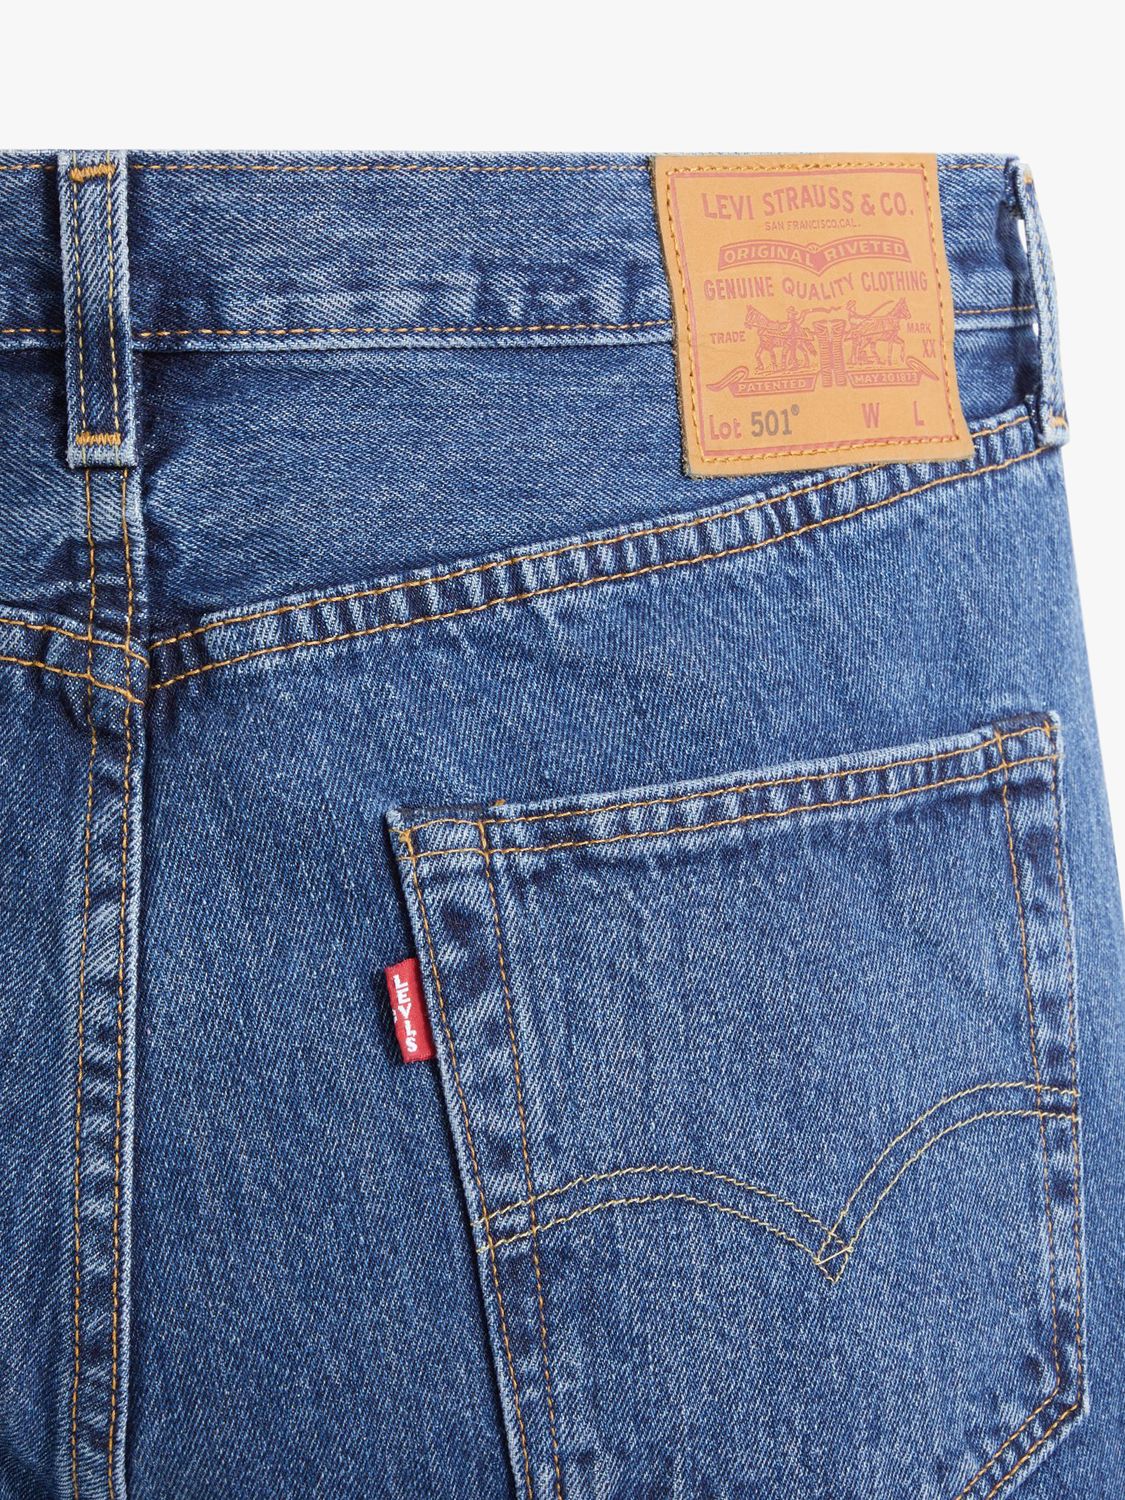 Levi's Big & Tall 501 Original Straight Jeans, Stonewash, 44R